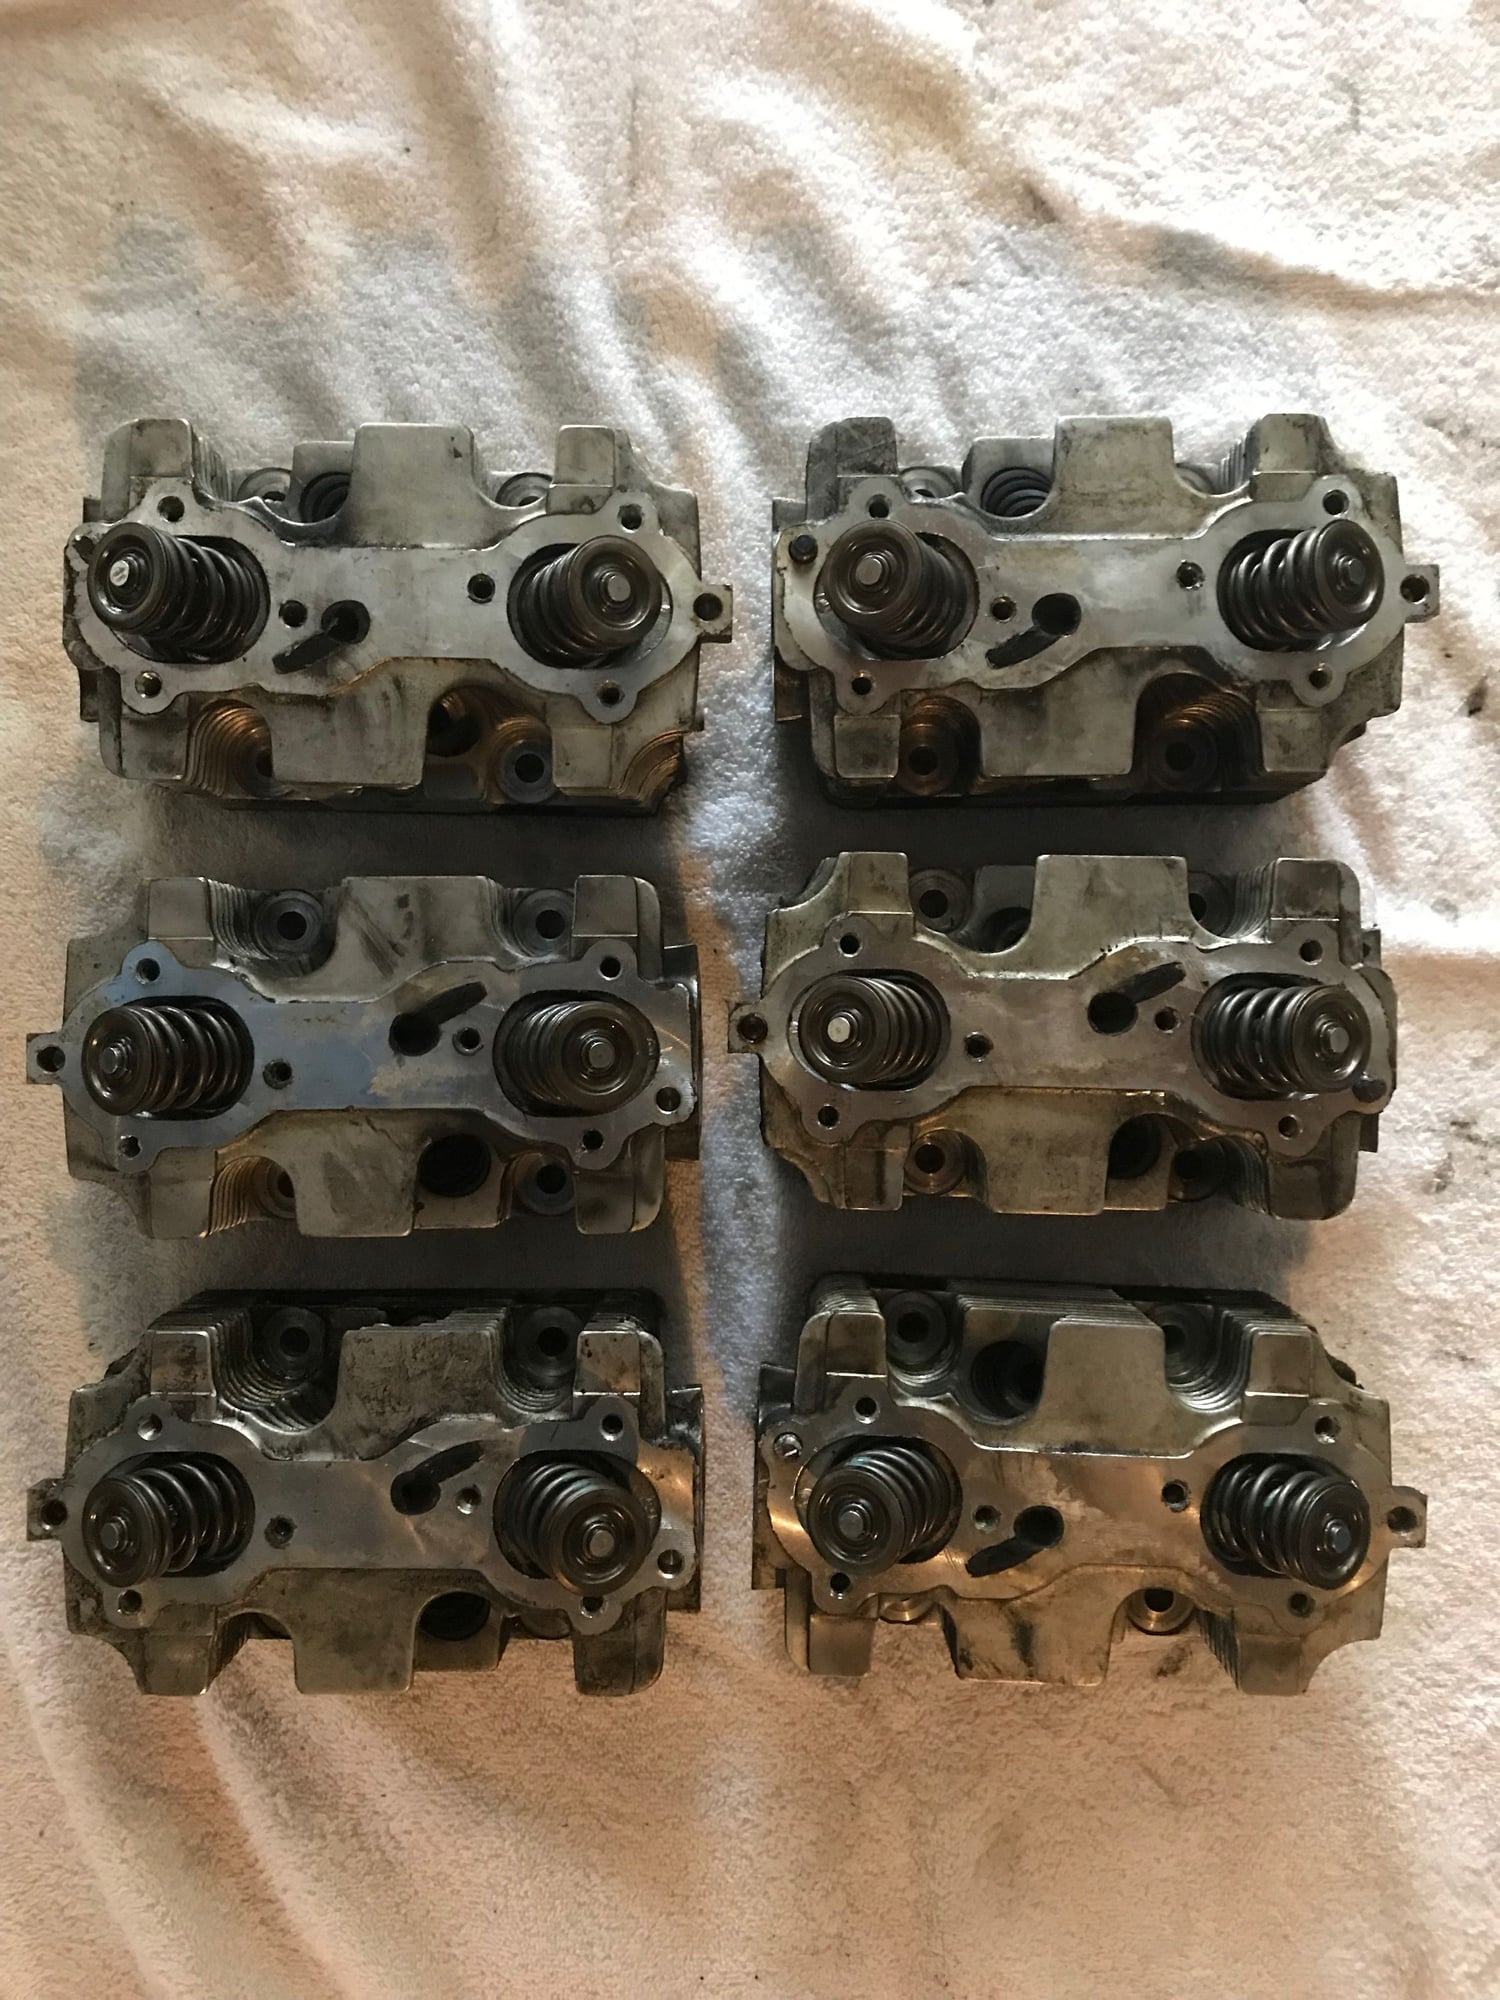 Engine - Internals - 993 Engine Parts For Sale: Heads, Crank, Cams, Oil Pump, suspension parts, etc!!! - Used - 1981 to 1998 Porsche 911 - Birmingham, AL 35226, United States